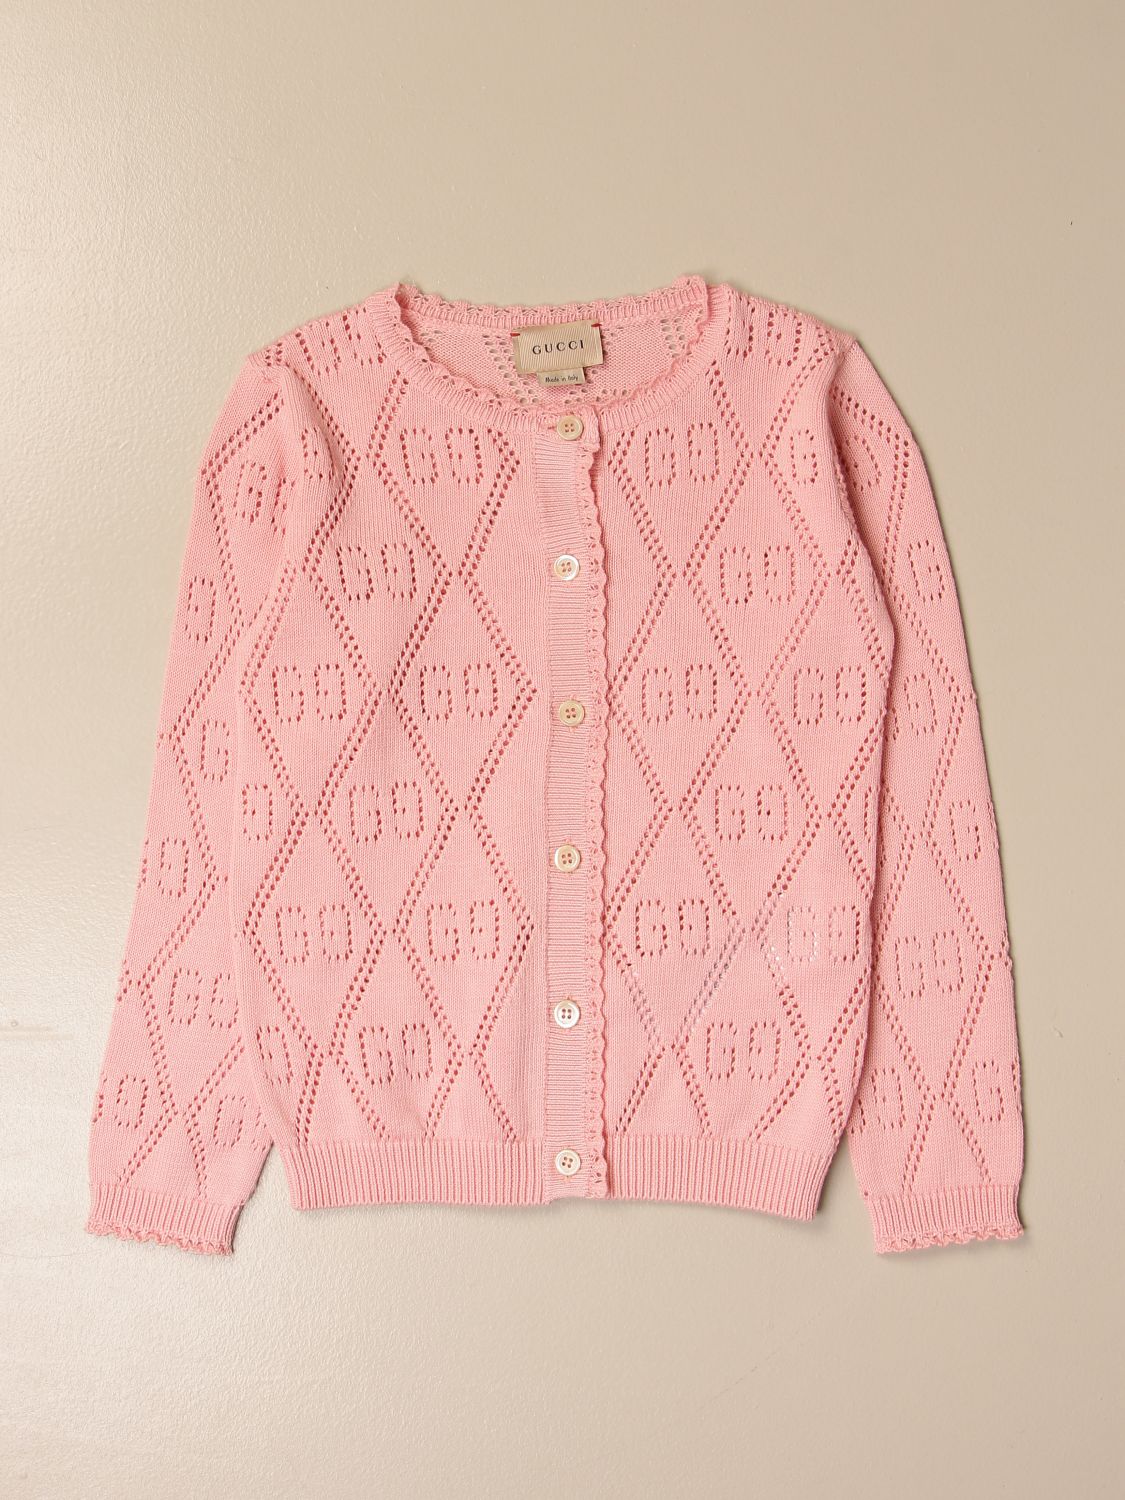 GUCCI: cardigan in GG knit - Pink | GUCCI sweater 642840 XKBQ0 online ...